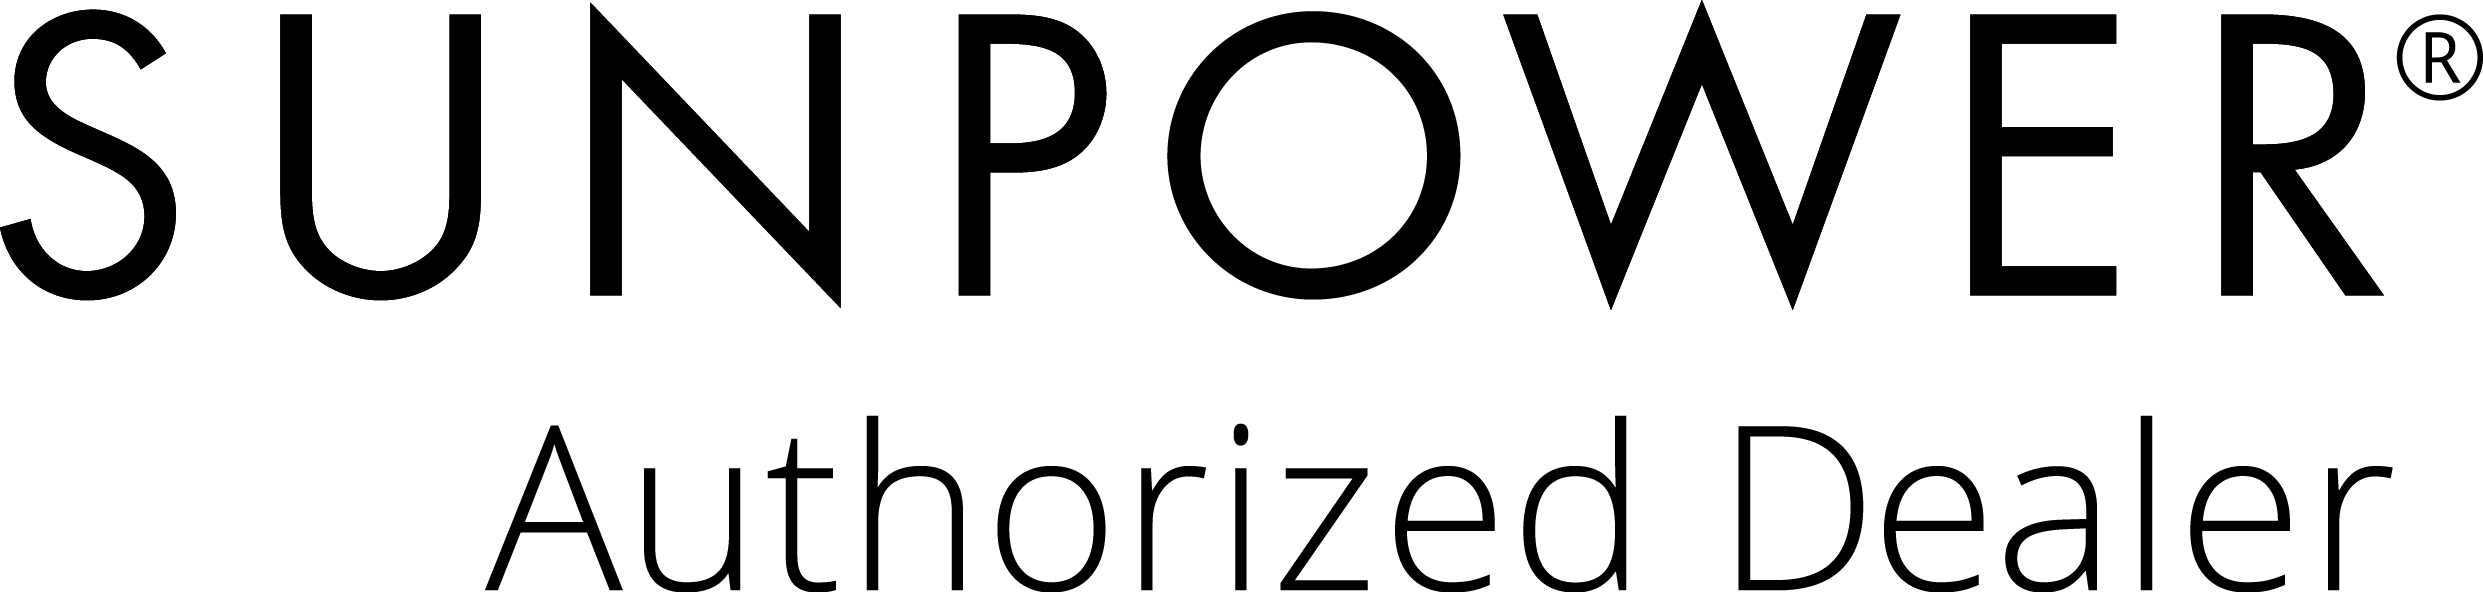 SunPower Authorized Dealer Logo - Open Version - Black (Vertical, PNG format).png